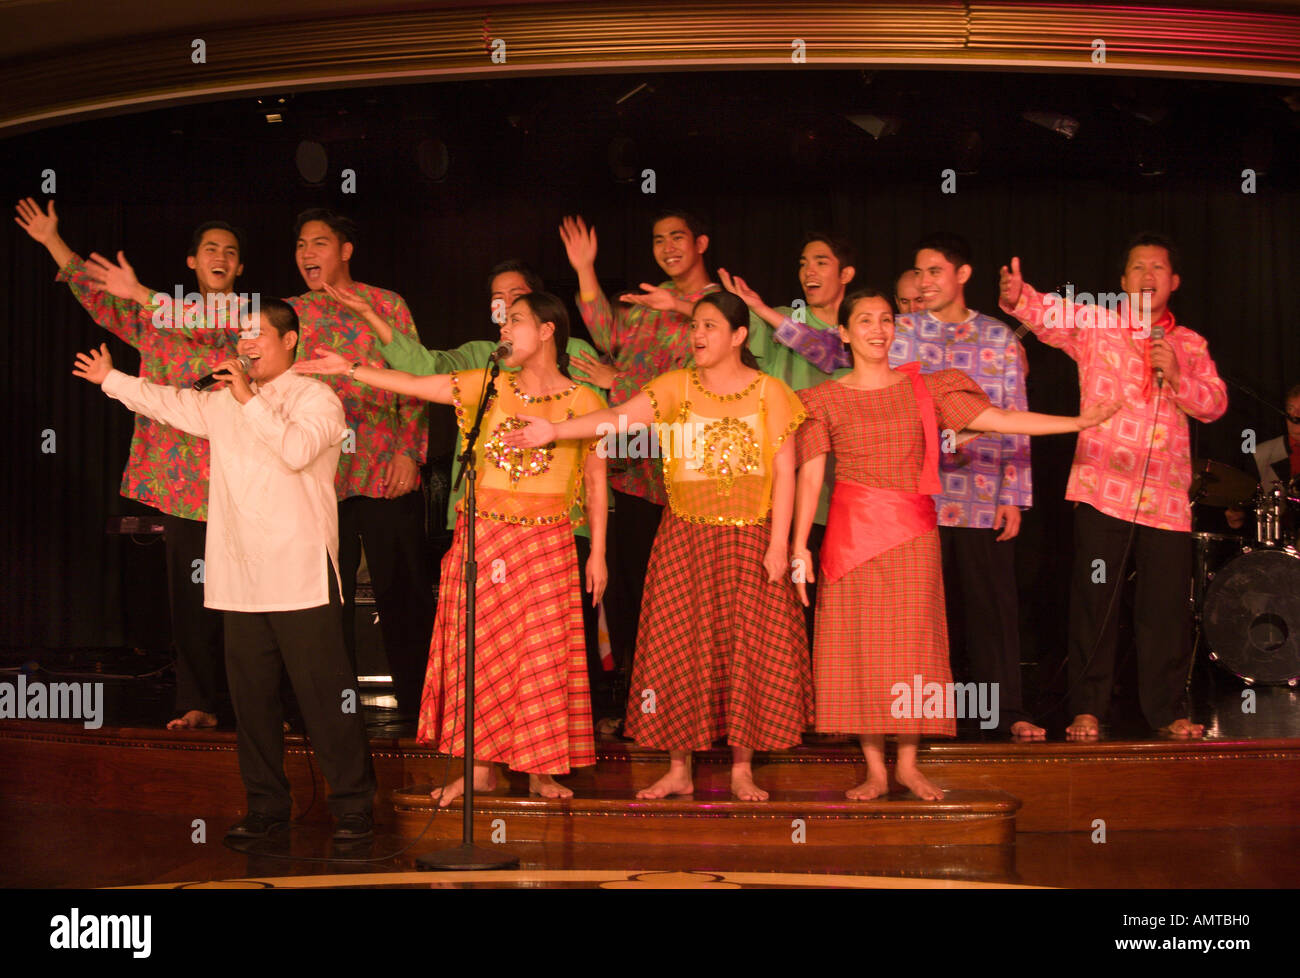 Members of Filipino crew twelve men and women singing and entertaining the passengers on a passenger ship cruise liner Stock Photo